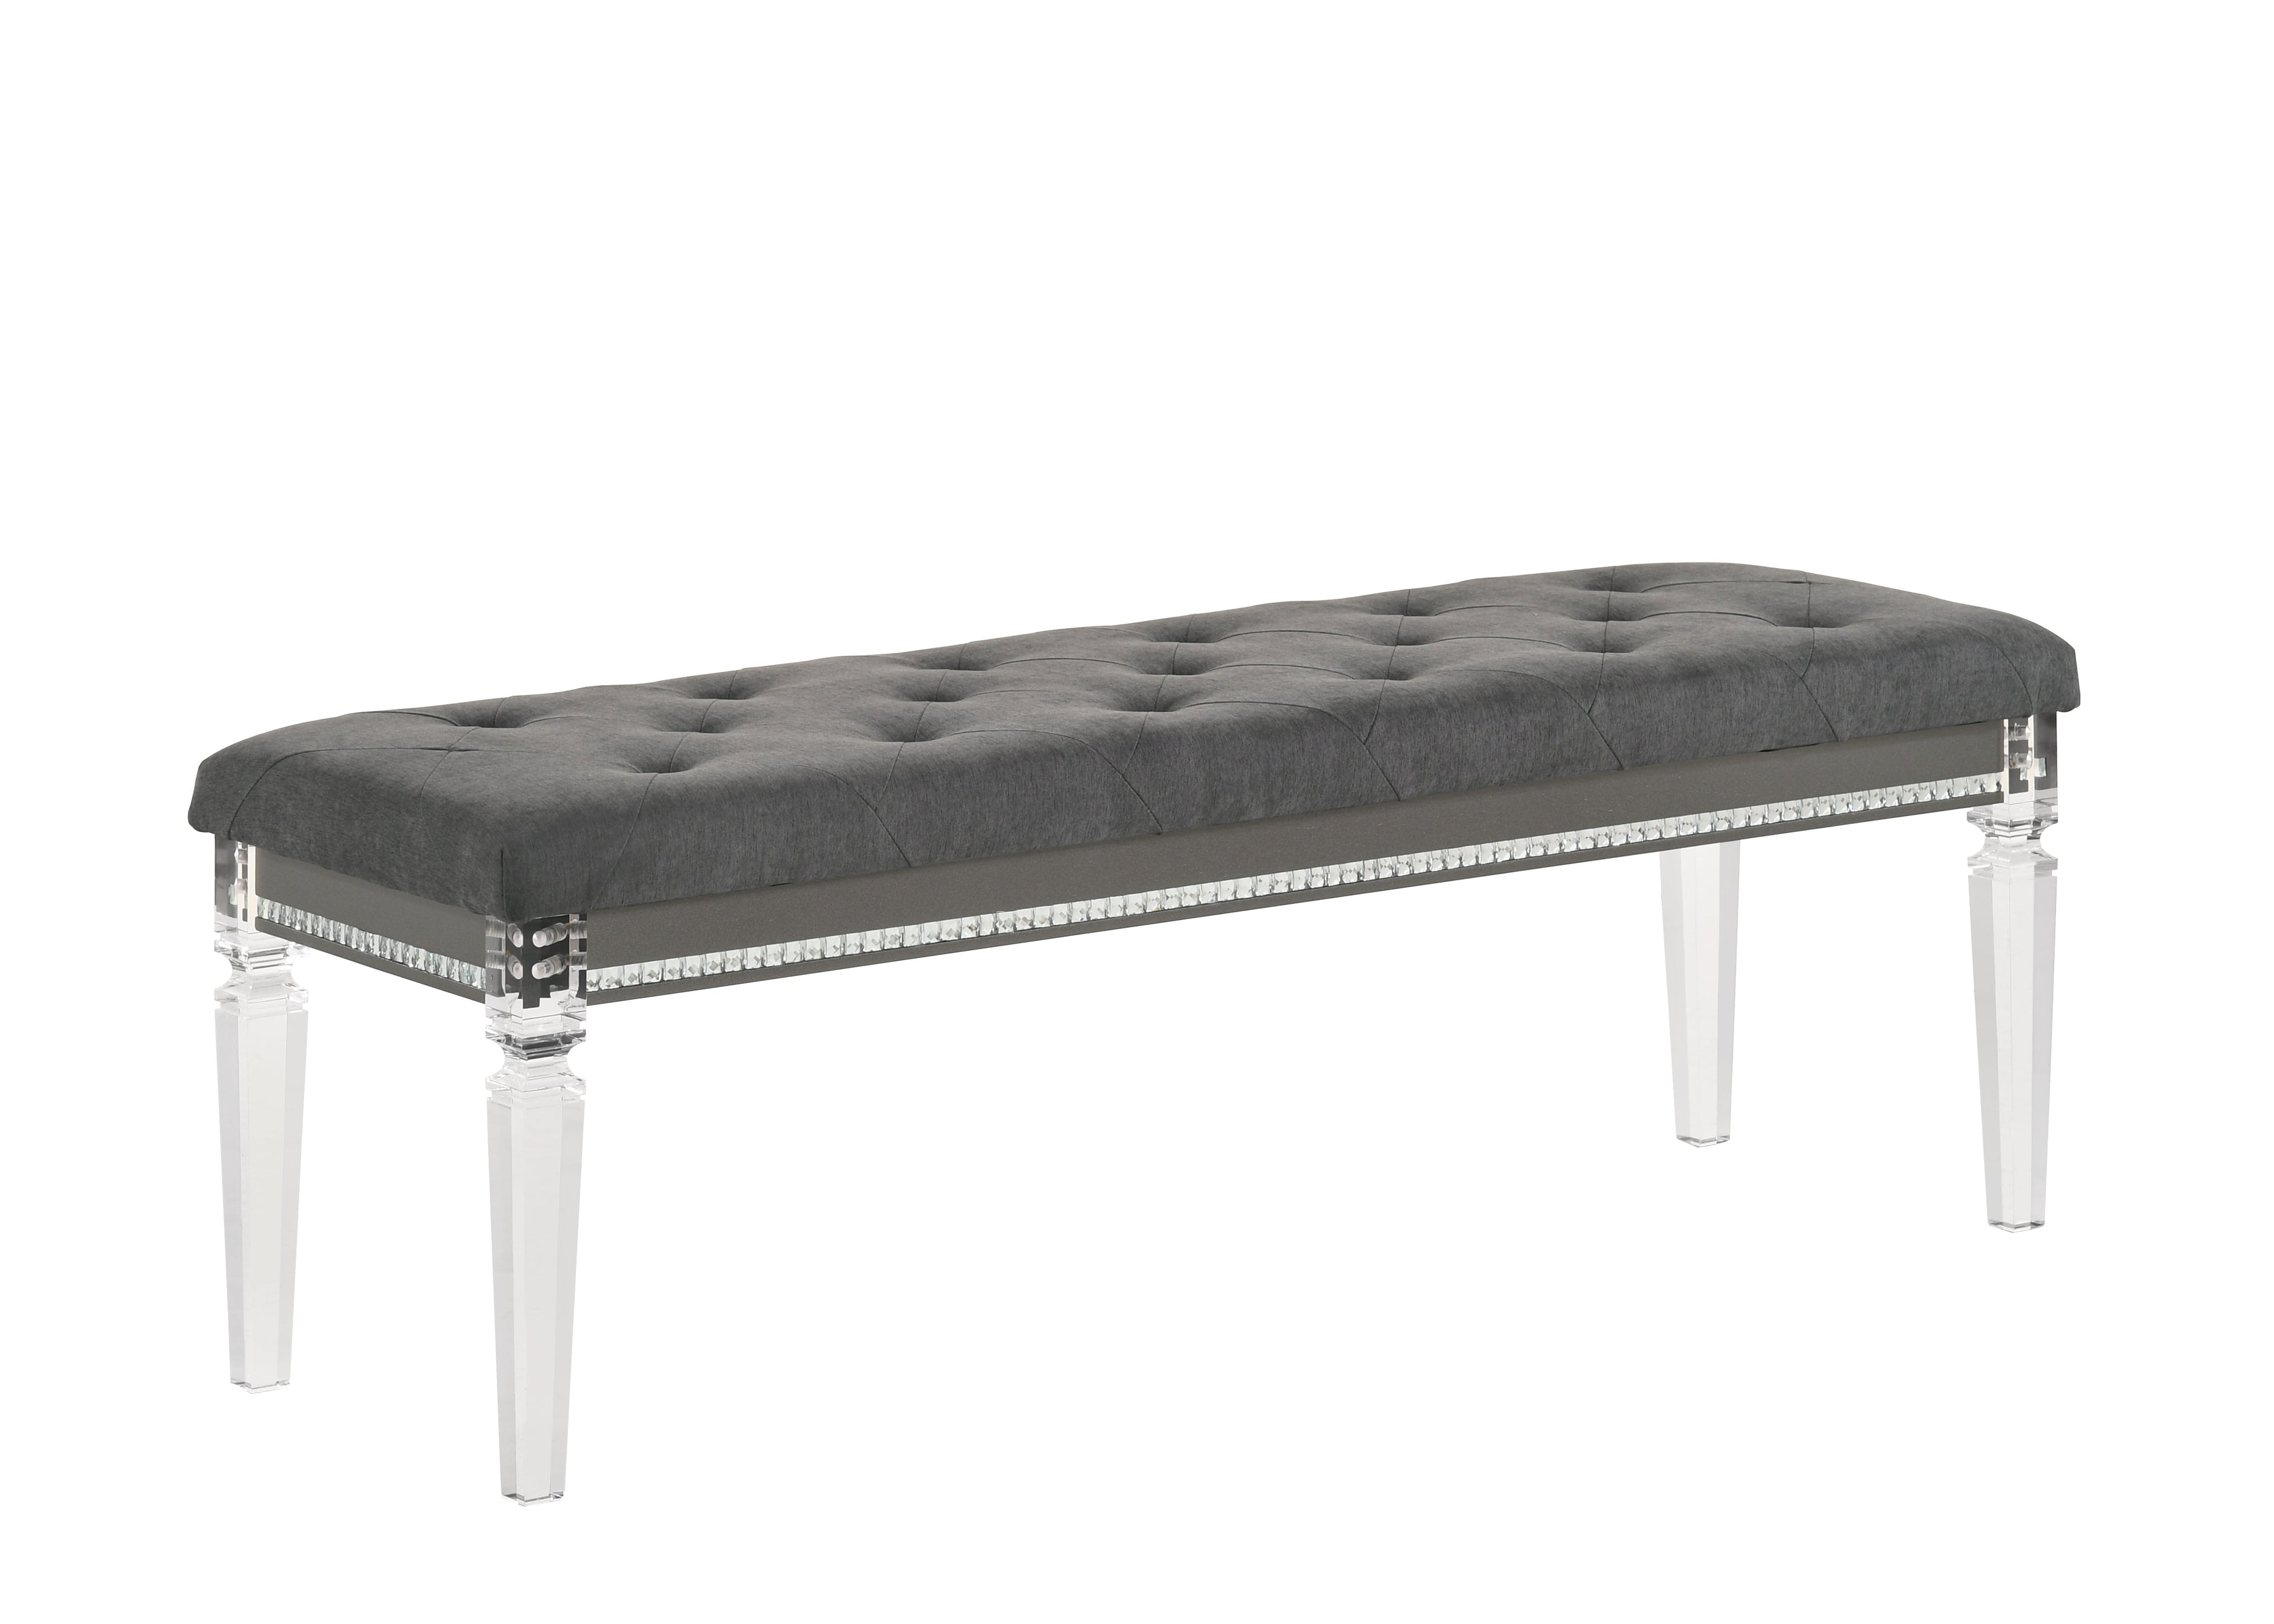 Giovani Gray Upholstered Panel Bedroom Set - SET | B7900-Q-HB | B7900-Q-FB | B7900-KQ-RAIL | B7900-2 | B7900-4 - Bien Home Furniture &amp; Electronics